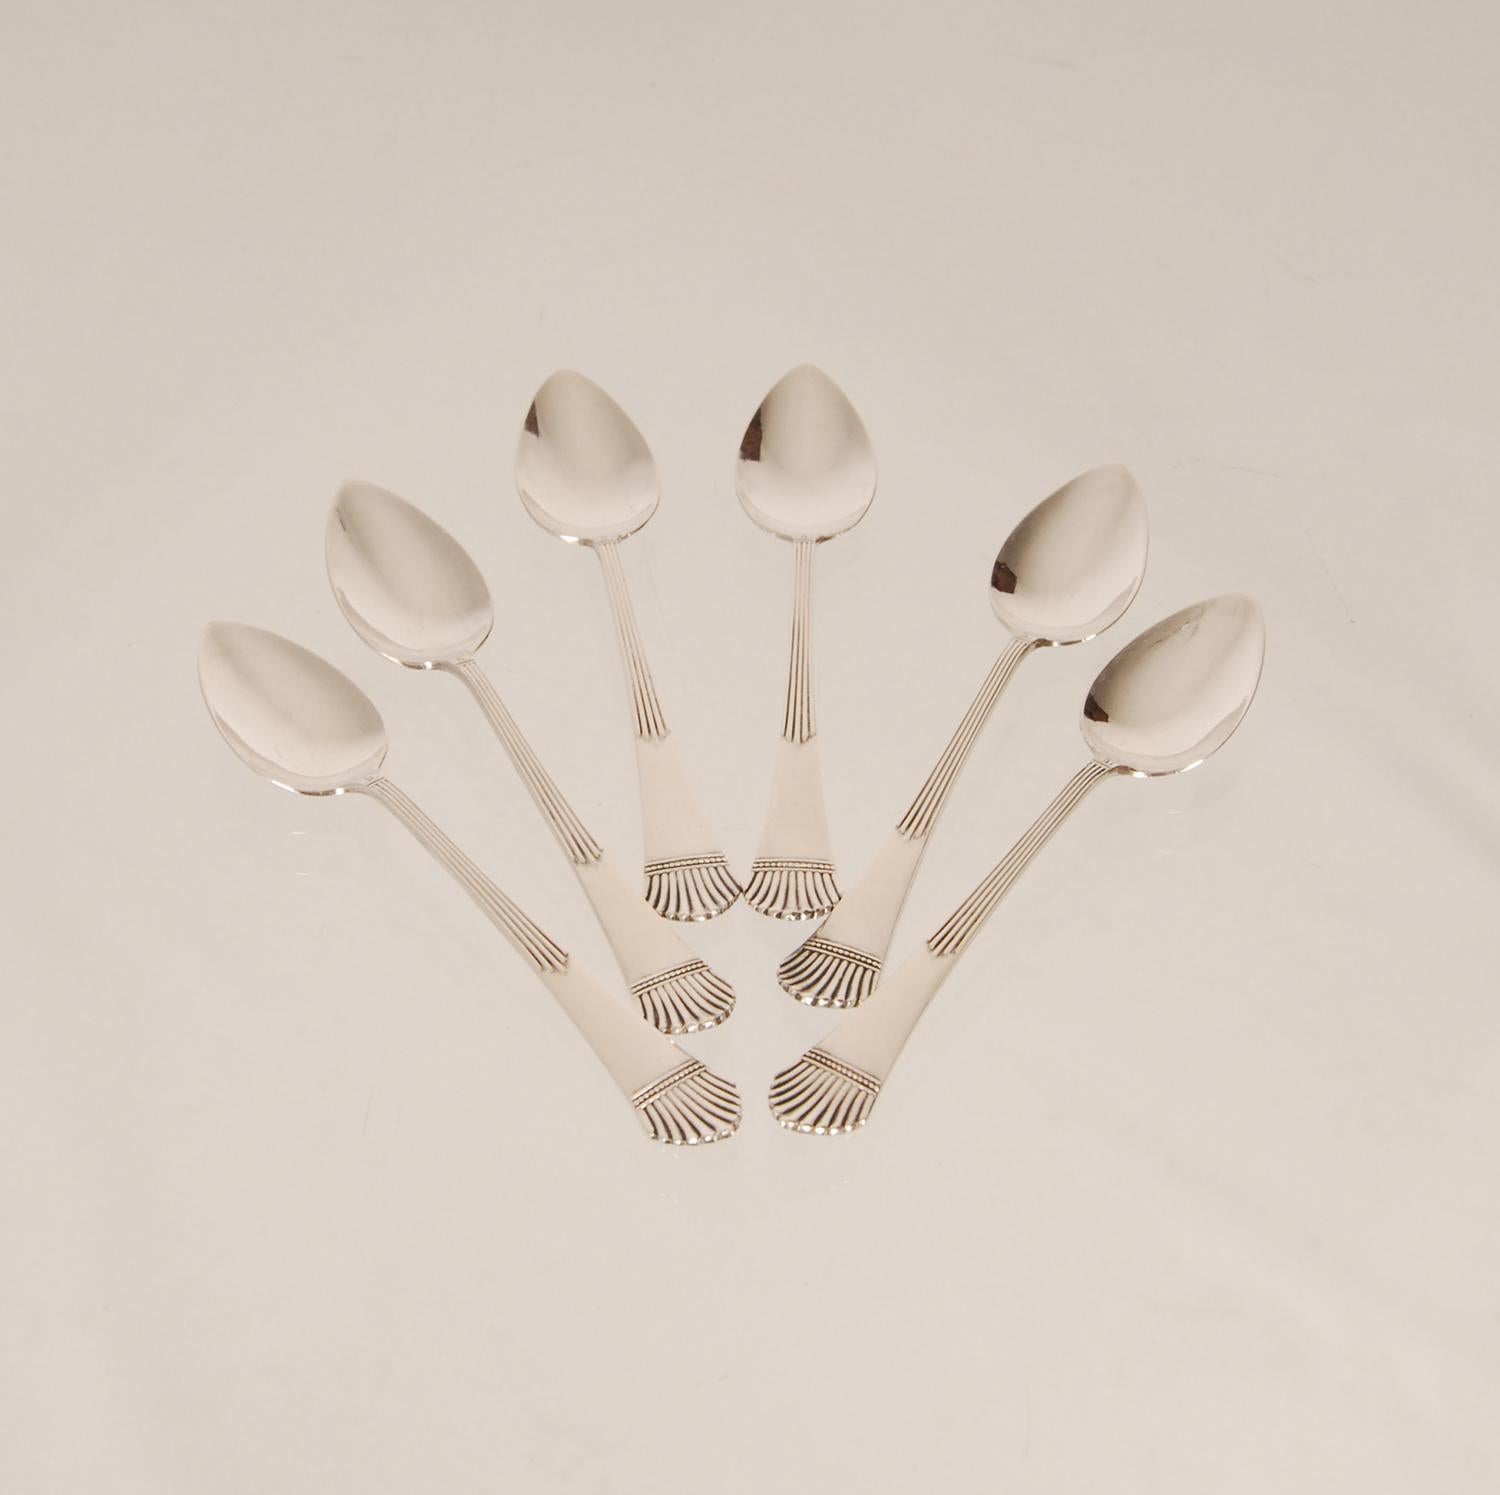 Art Deco Sterling Silver Flatware 1920s Spoons, Forks, Cake Server Set 31 Pieces 6